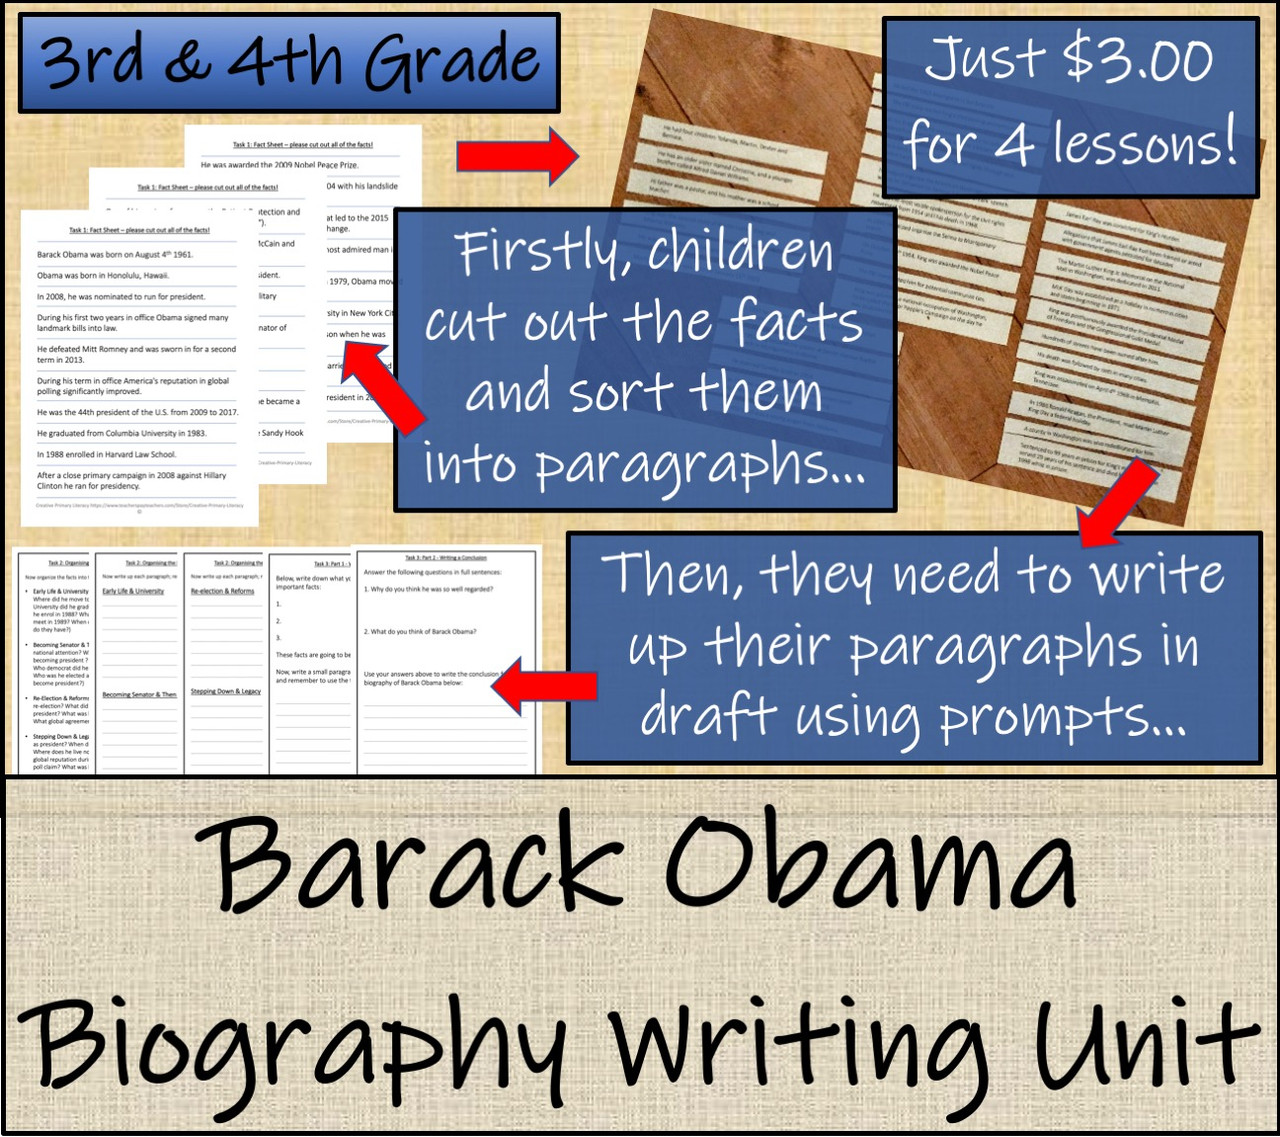 Barack Obama - 3rd & 4th Grade Biography Writing Activity